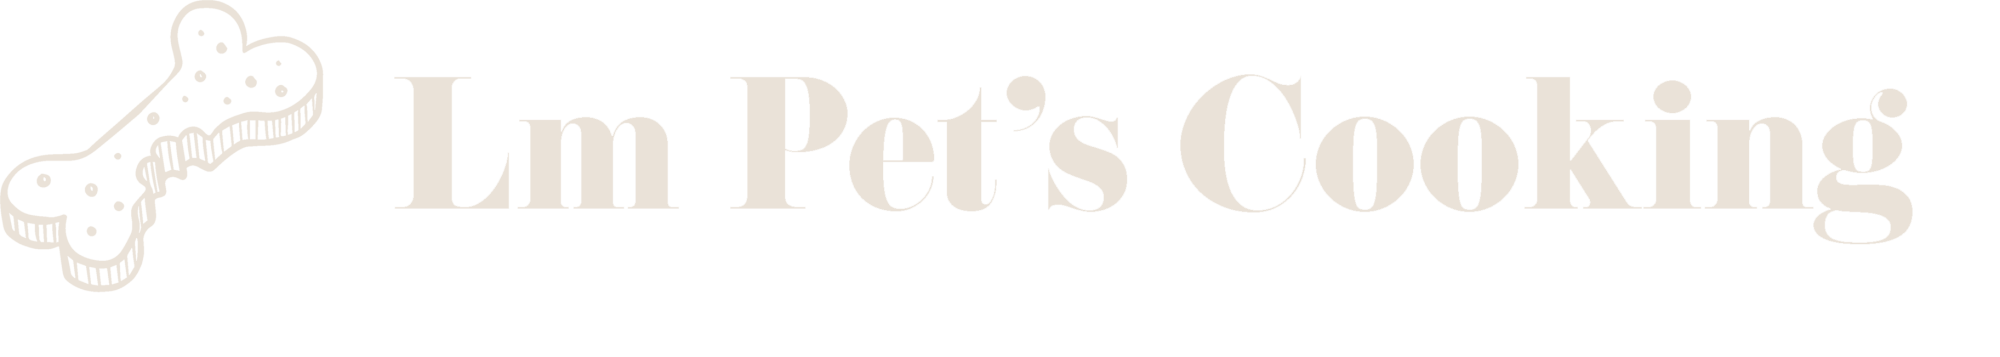 logo transparent LM Pets Cooking